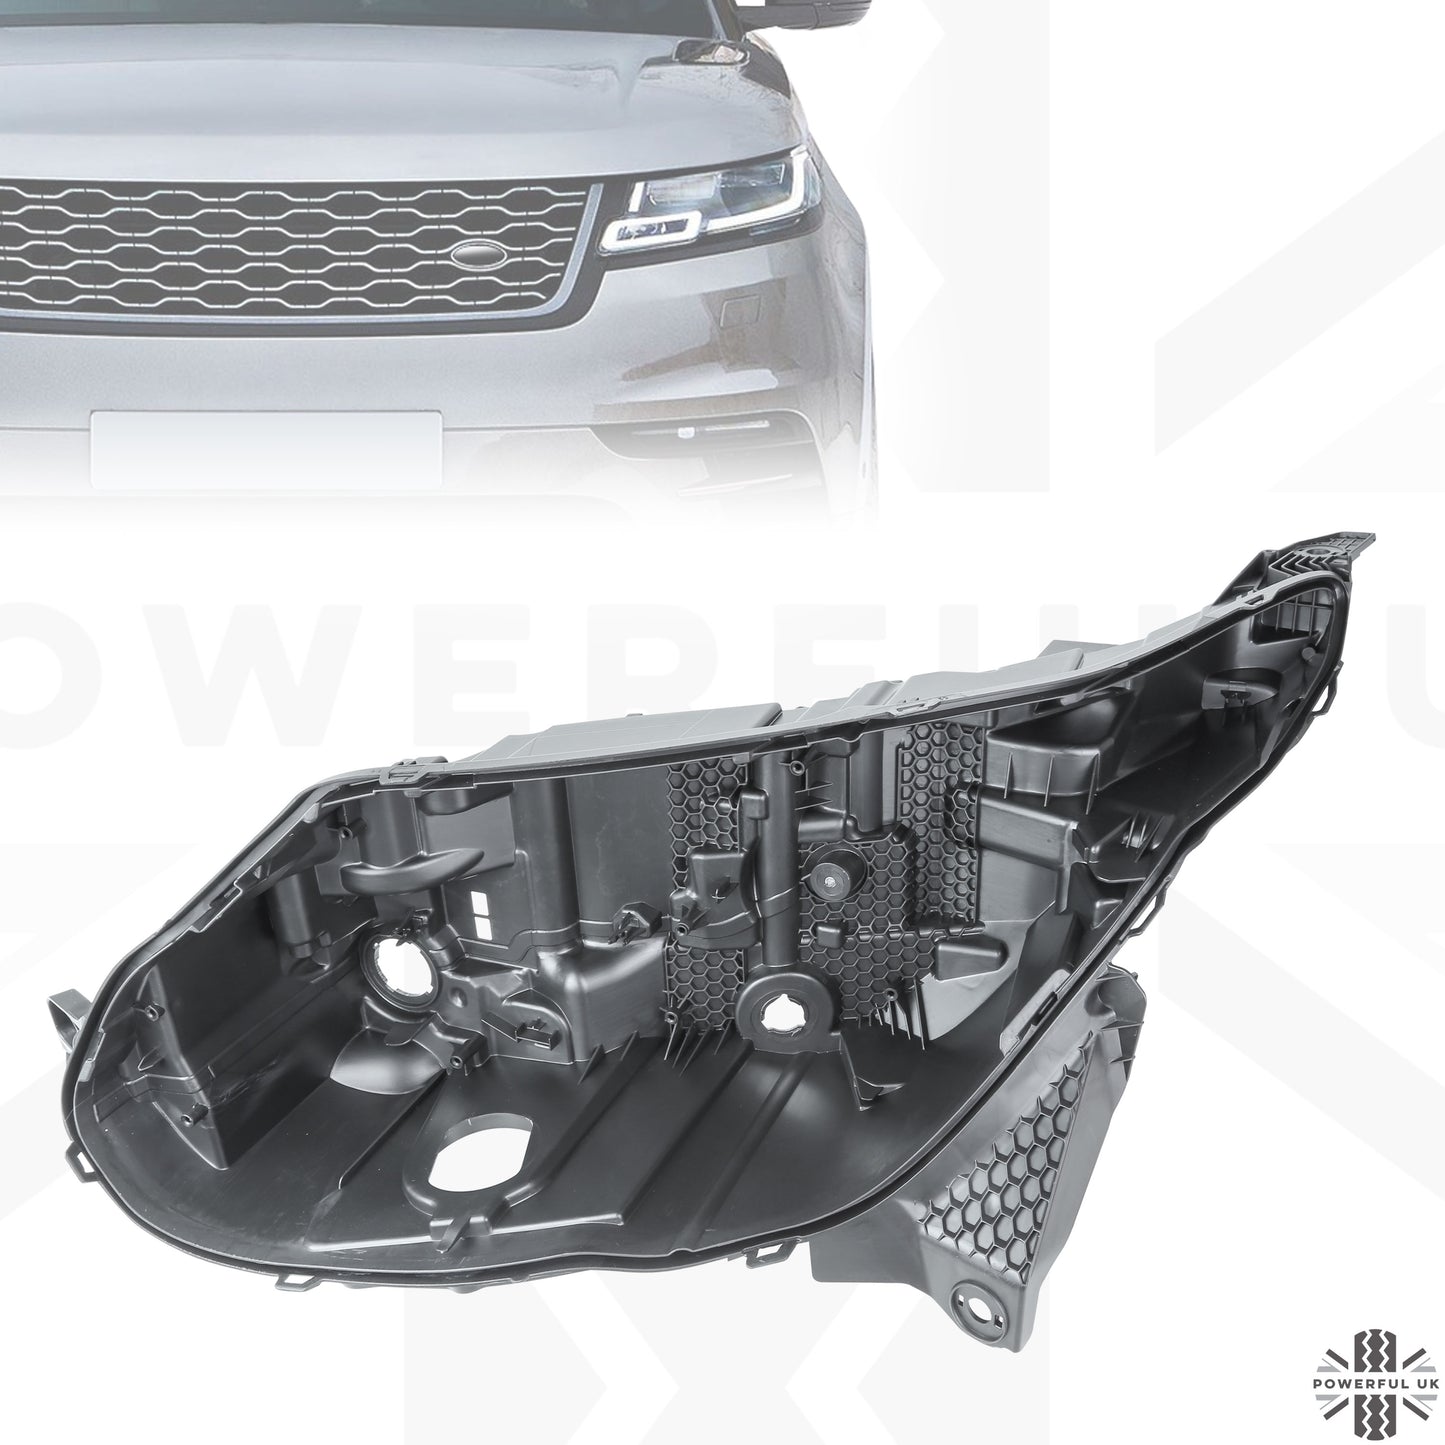 Replacement Headlight Rear Housing for Range Rover Velar - LH